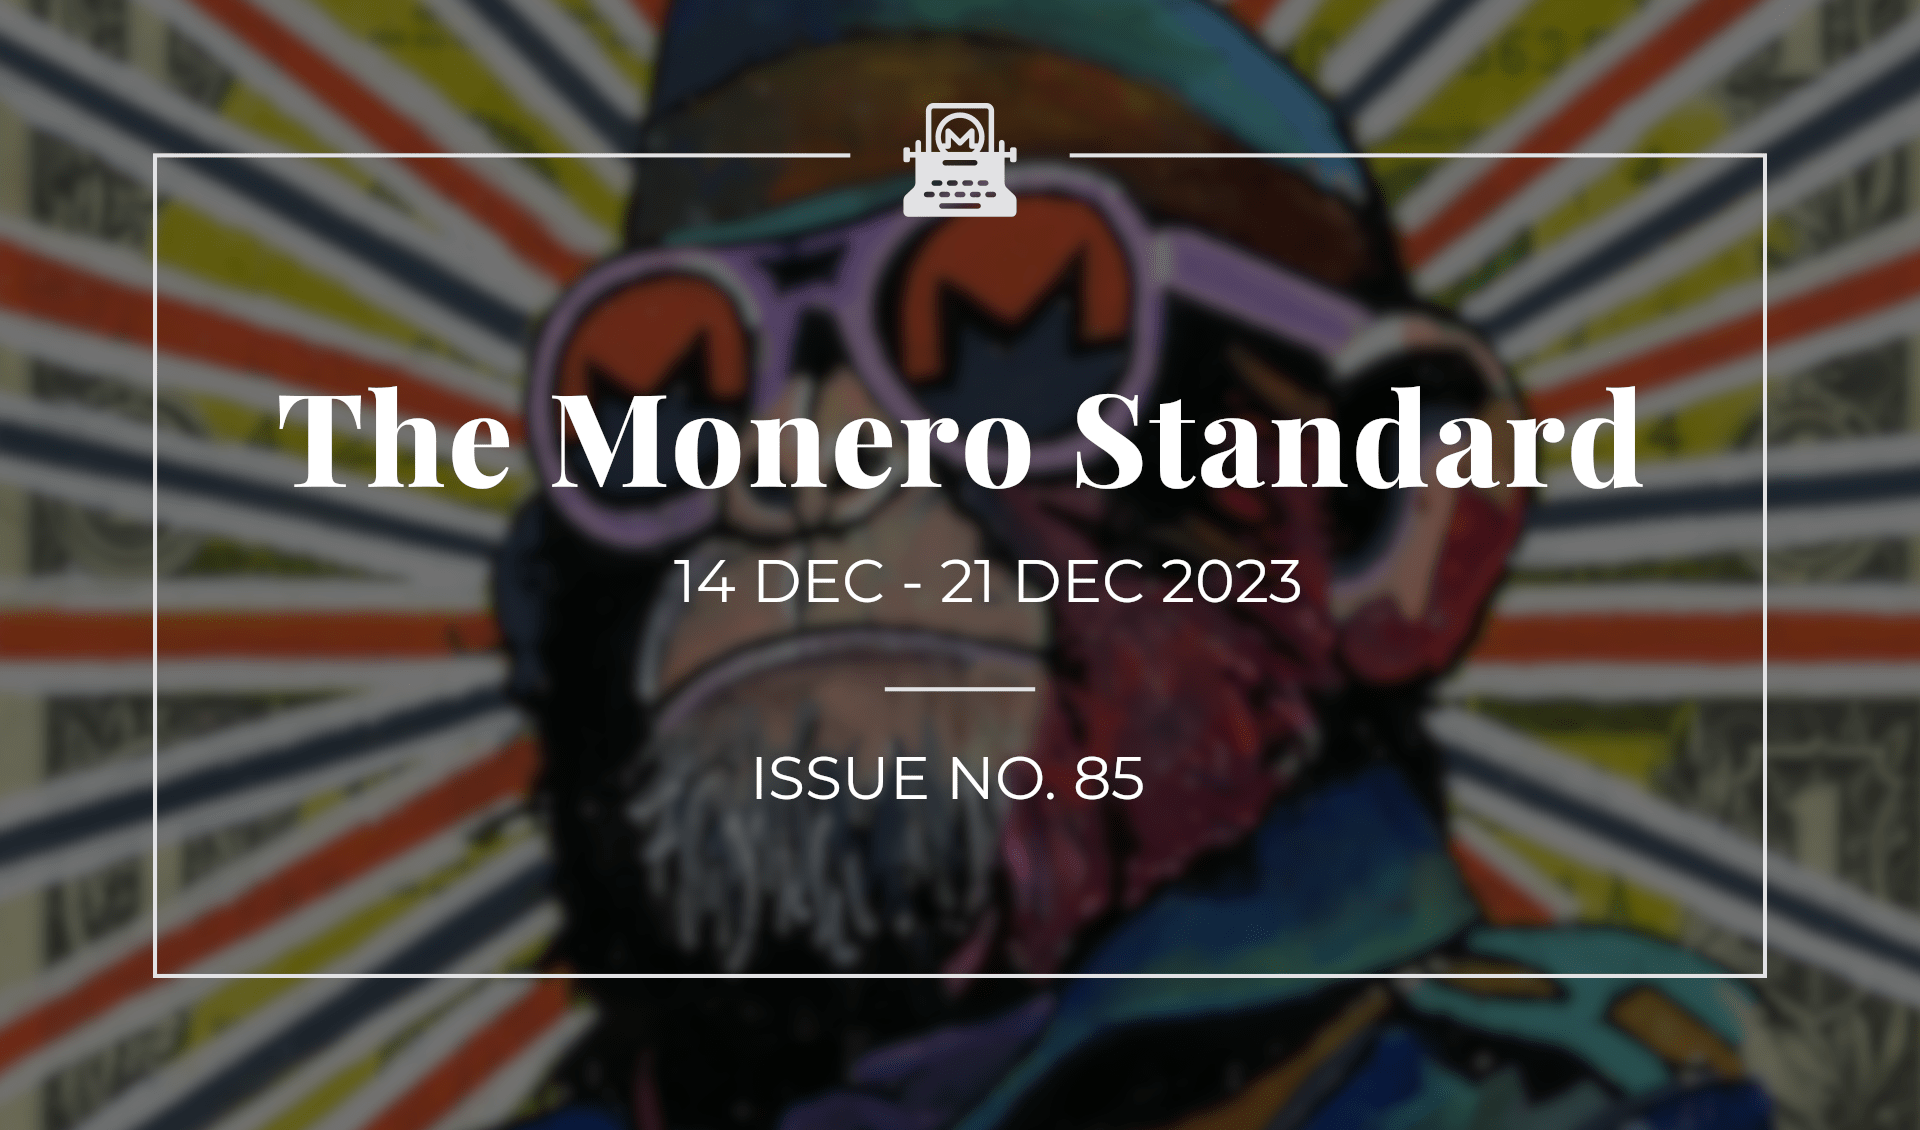 The Monero Standard #85: 14 Dec 2023 - 21 Dec 2023